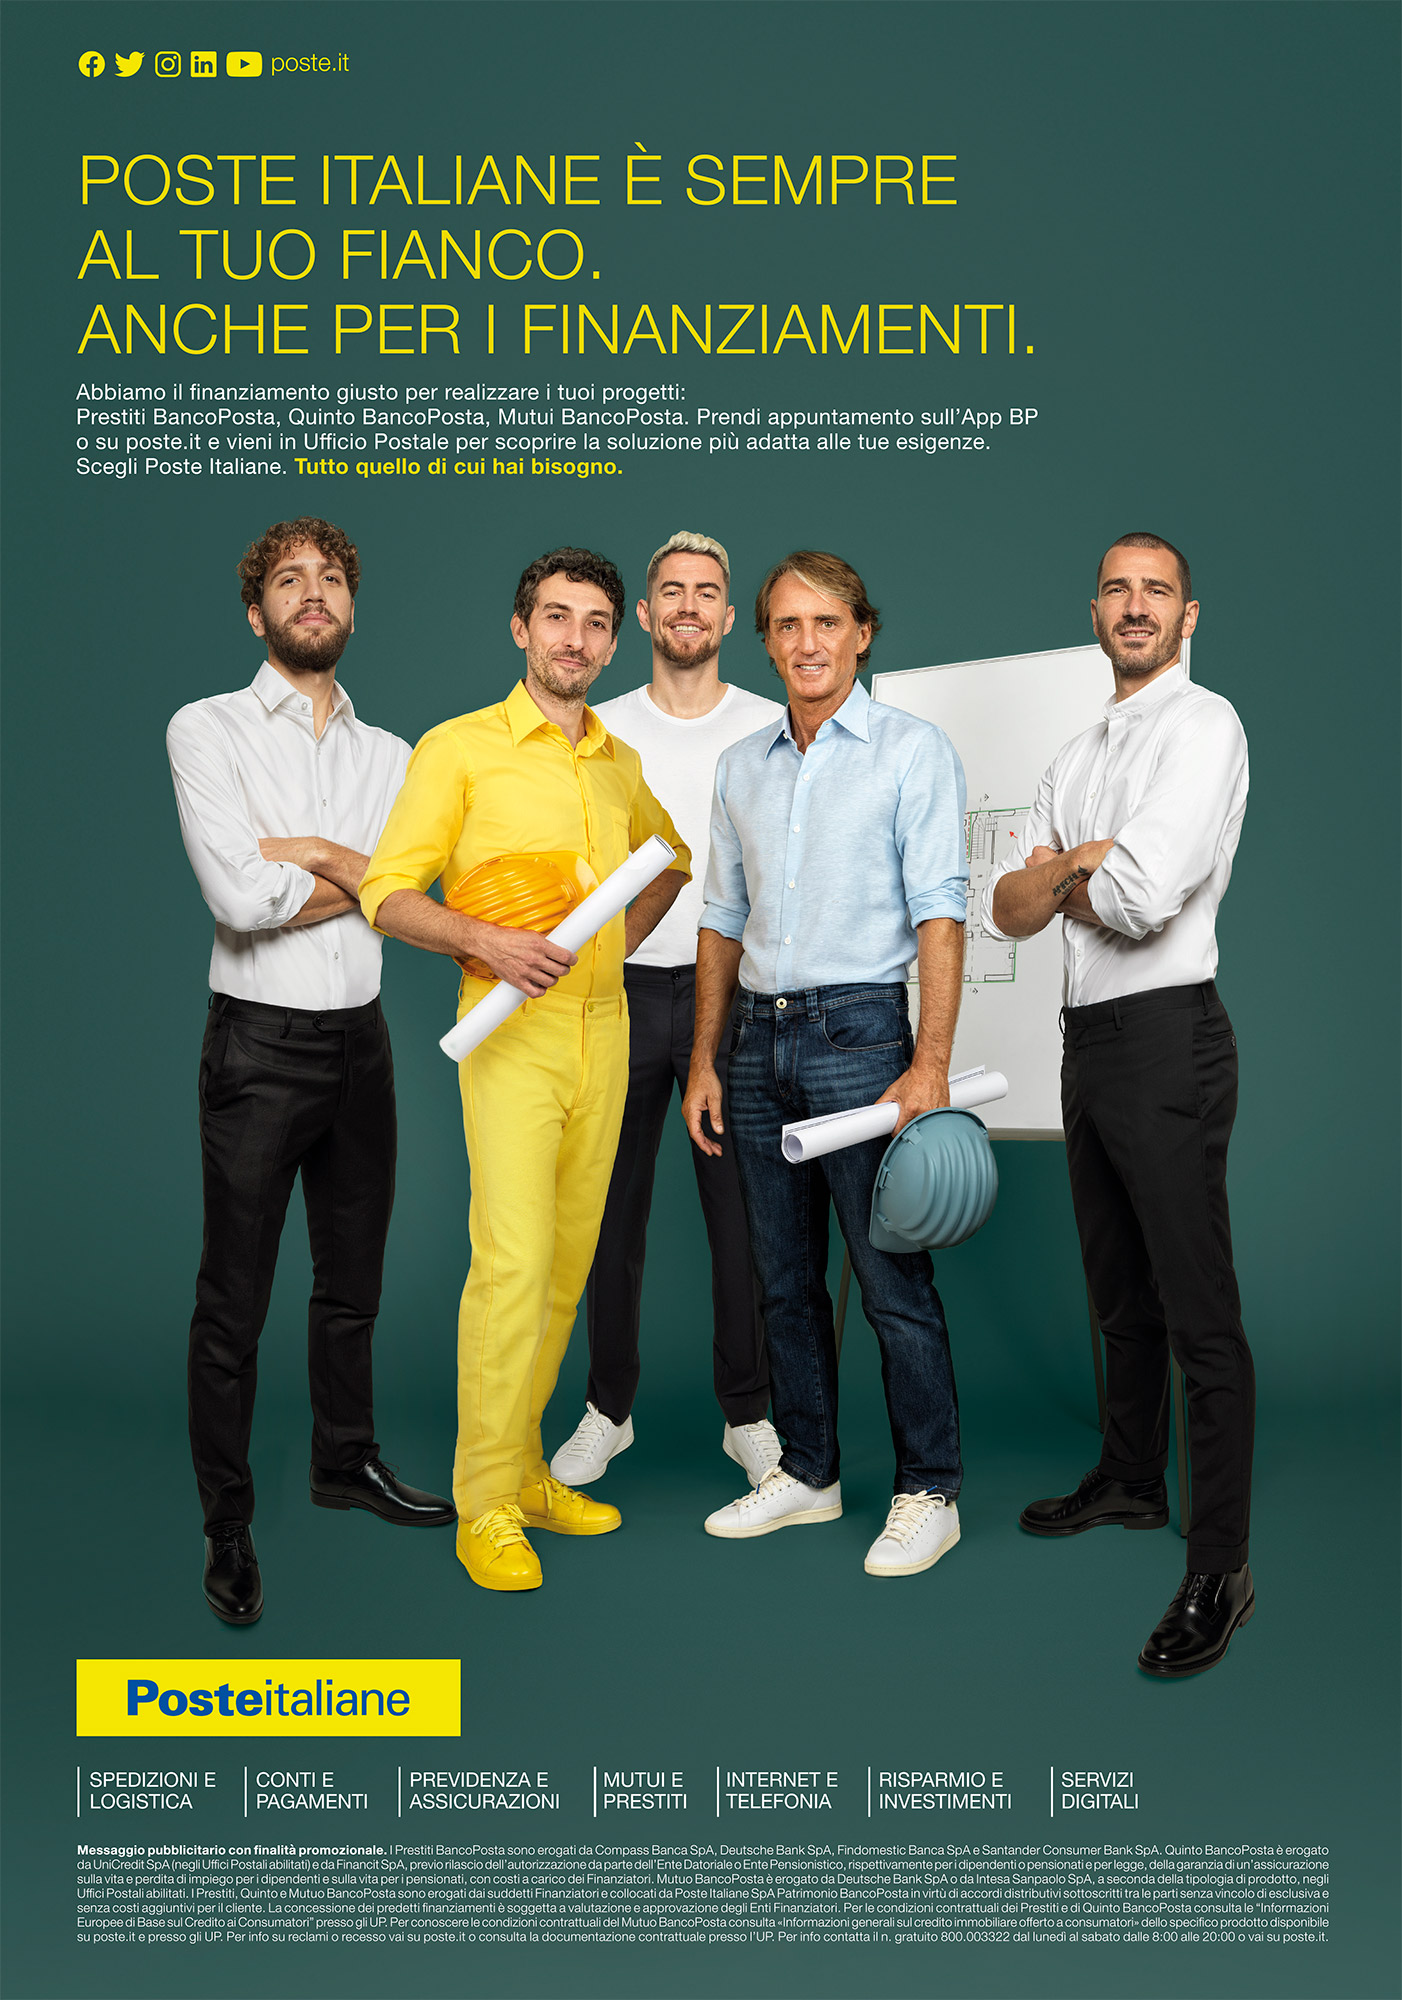 Italian Team for Poste Italiane - AD Campaign - Agency Saatchi & Saatchi